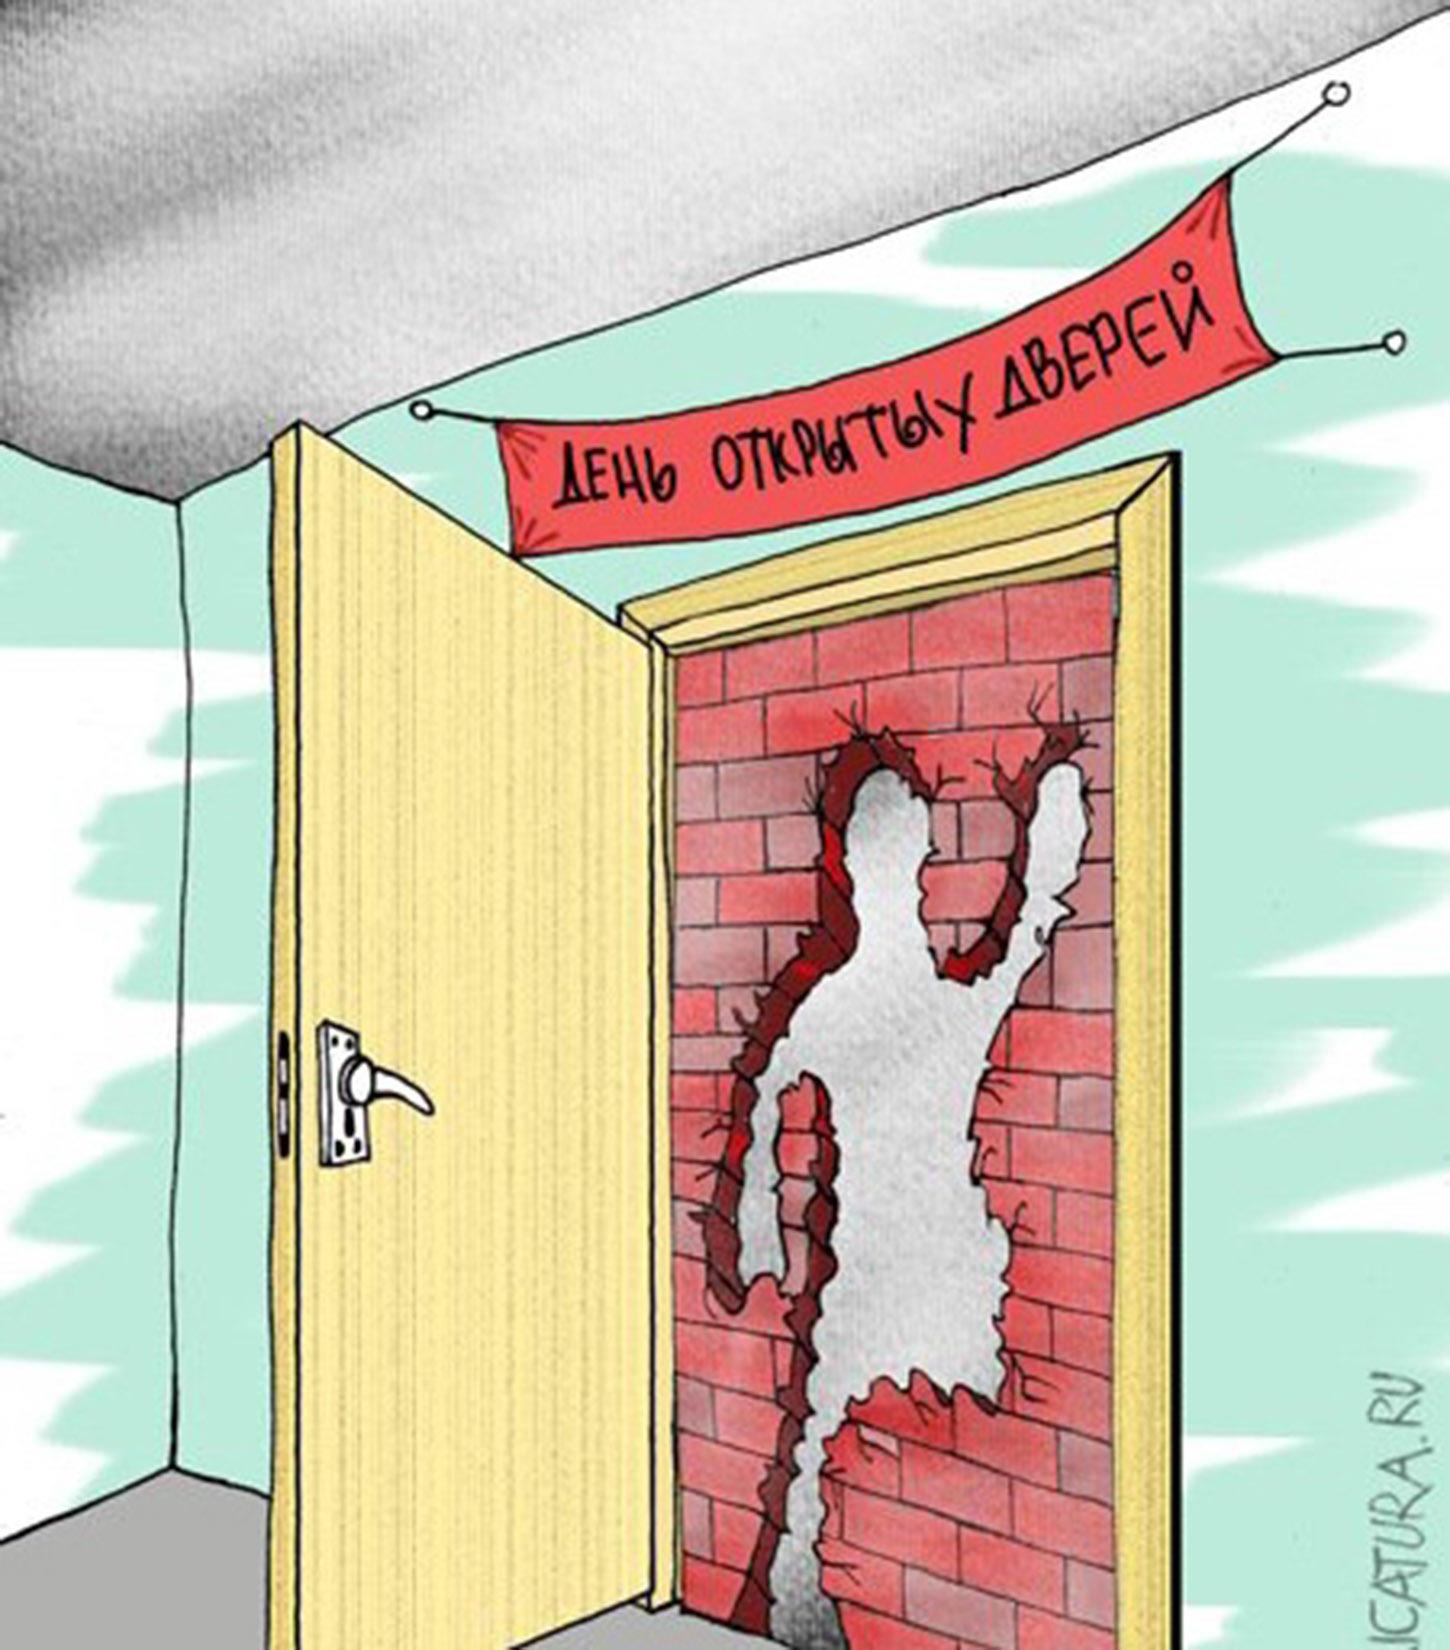 Тут там двери. Дверь карикатура. Карикатура на входную дверь. Стук в дверь карикатуры. Ломится в дверь карикатура.